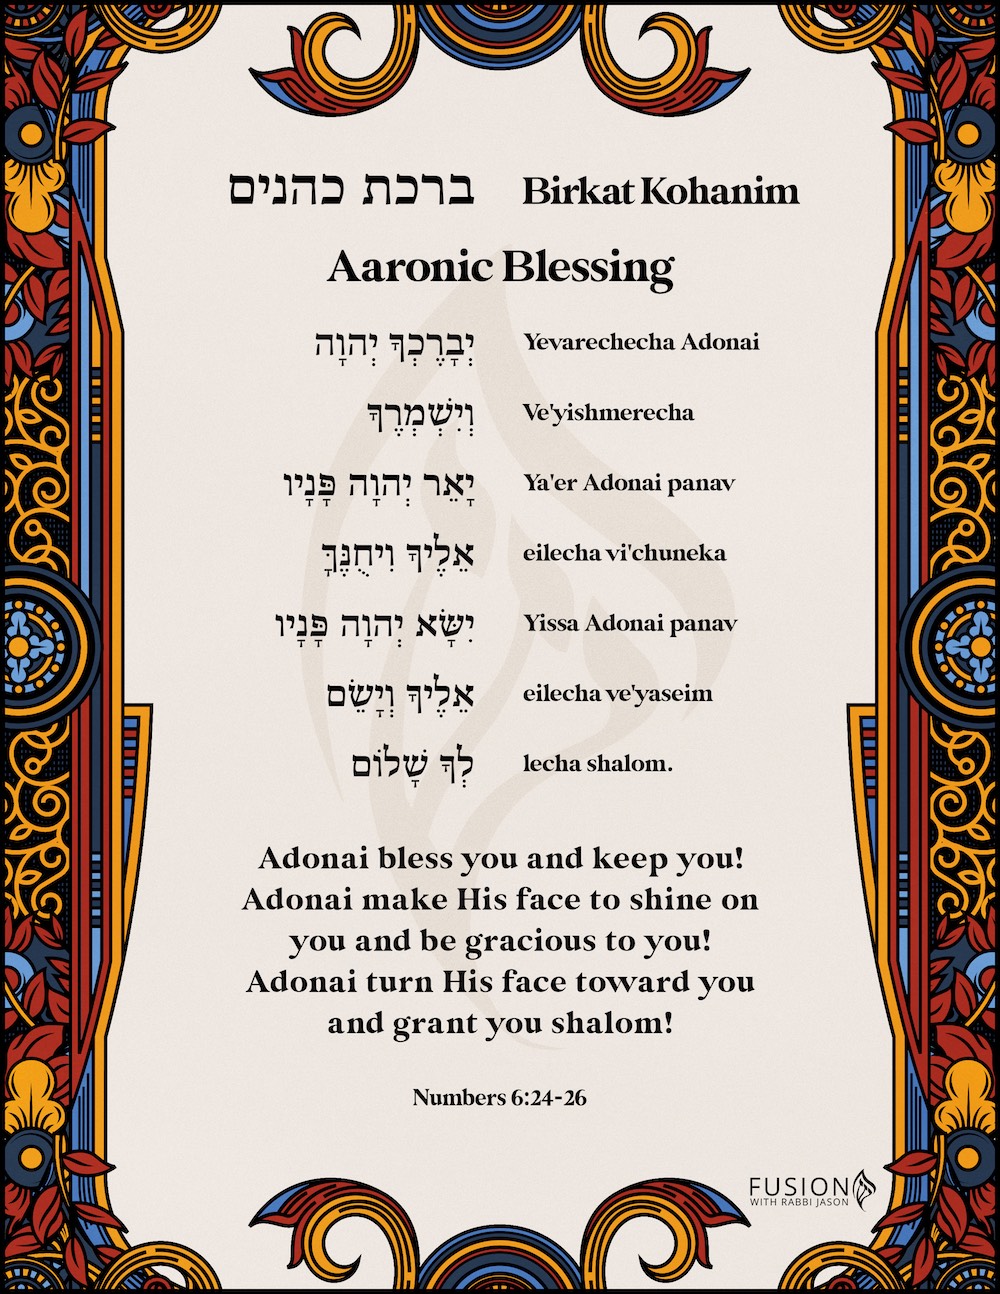 Birkat Kohanim The Priestly Blessing Fusion Global With Rabbi